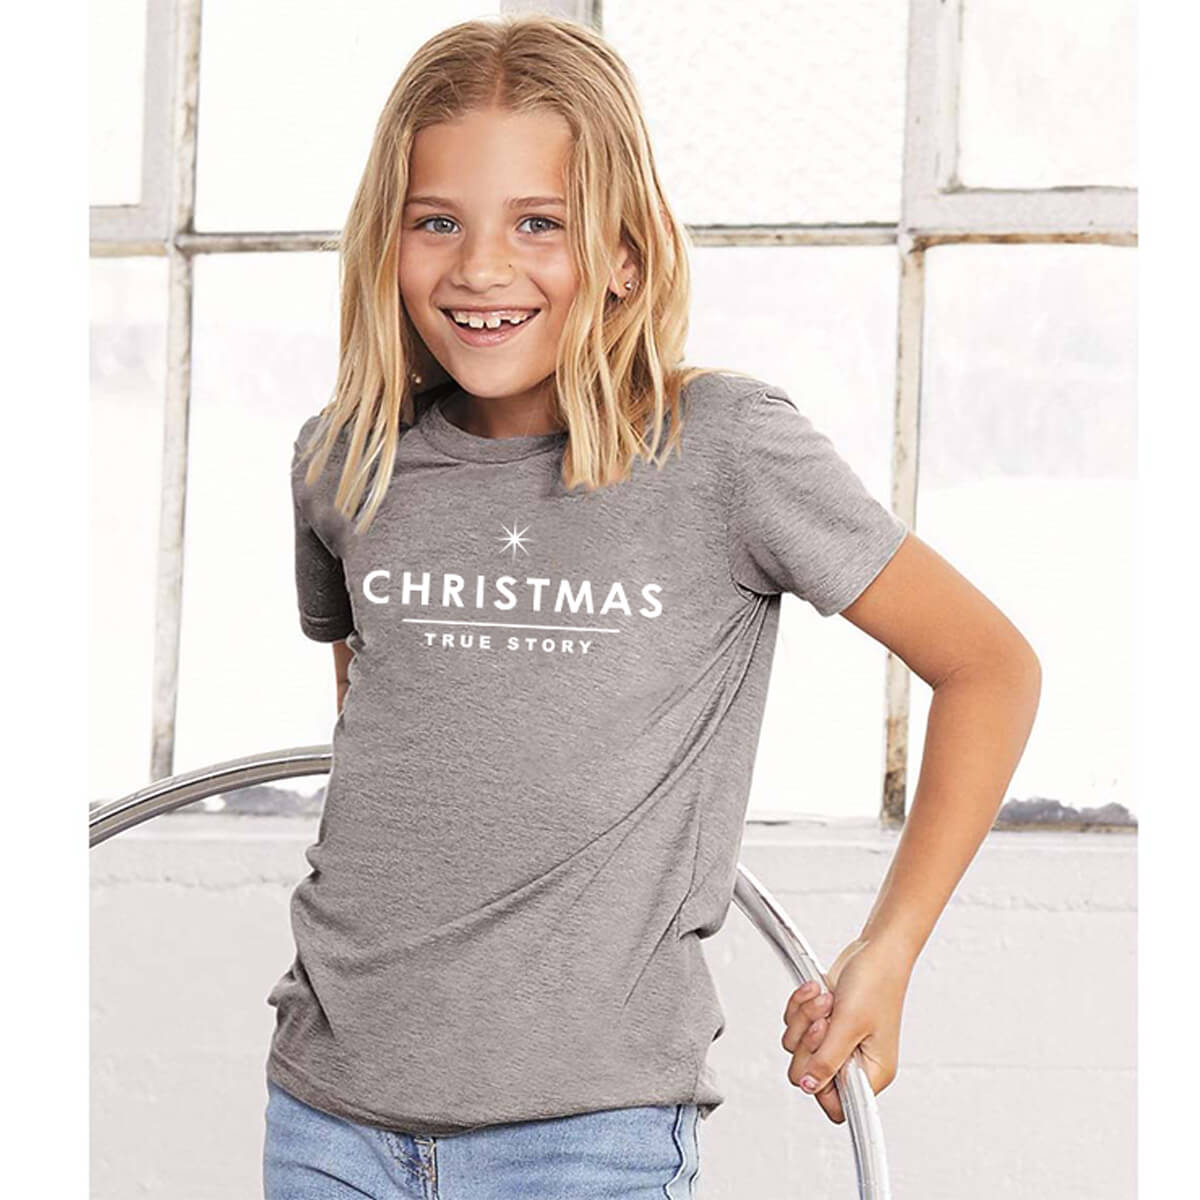 Christmas True Story Youth T Shirt